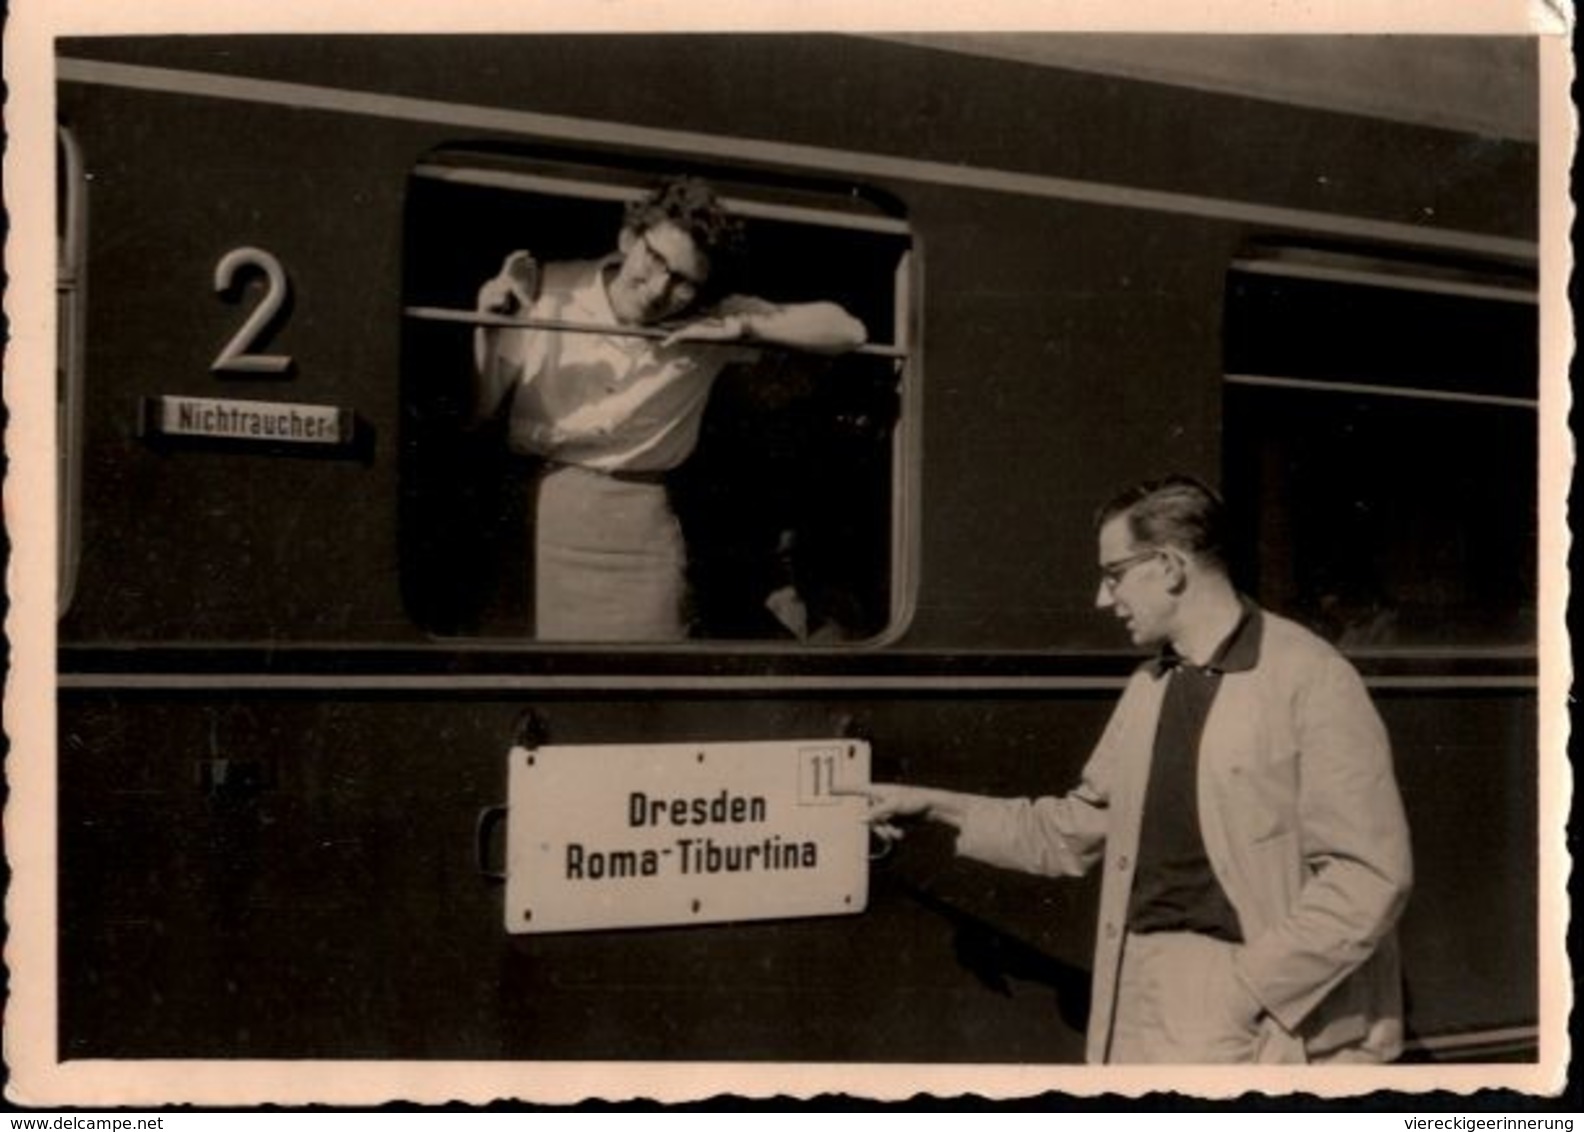 ! Olympiade Rom , Roma, 1960 Interessantes Konvolut über 25 Teile, 9 Eintrittskarten, Programme, Reiseunterlagen Etc. - Sommer 1960: Rom